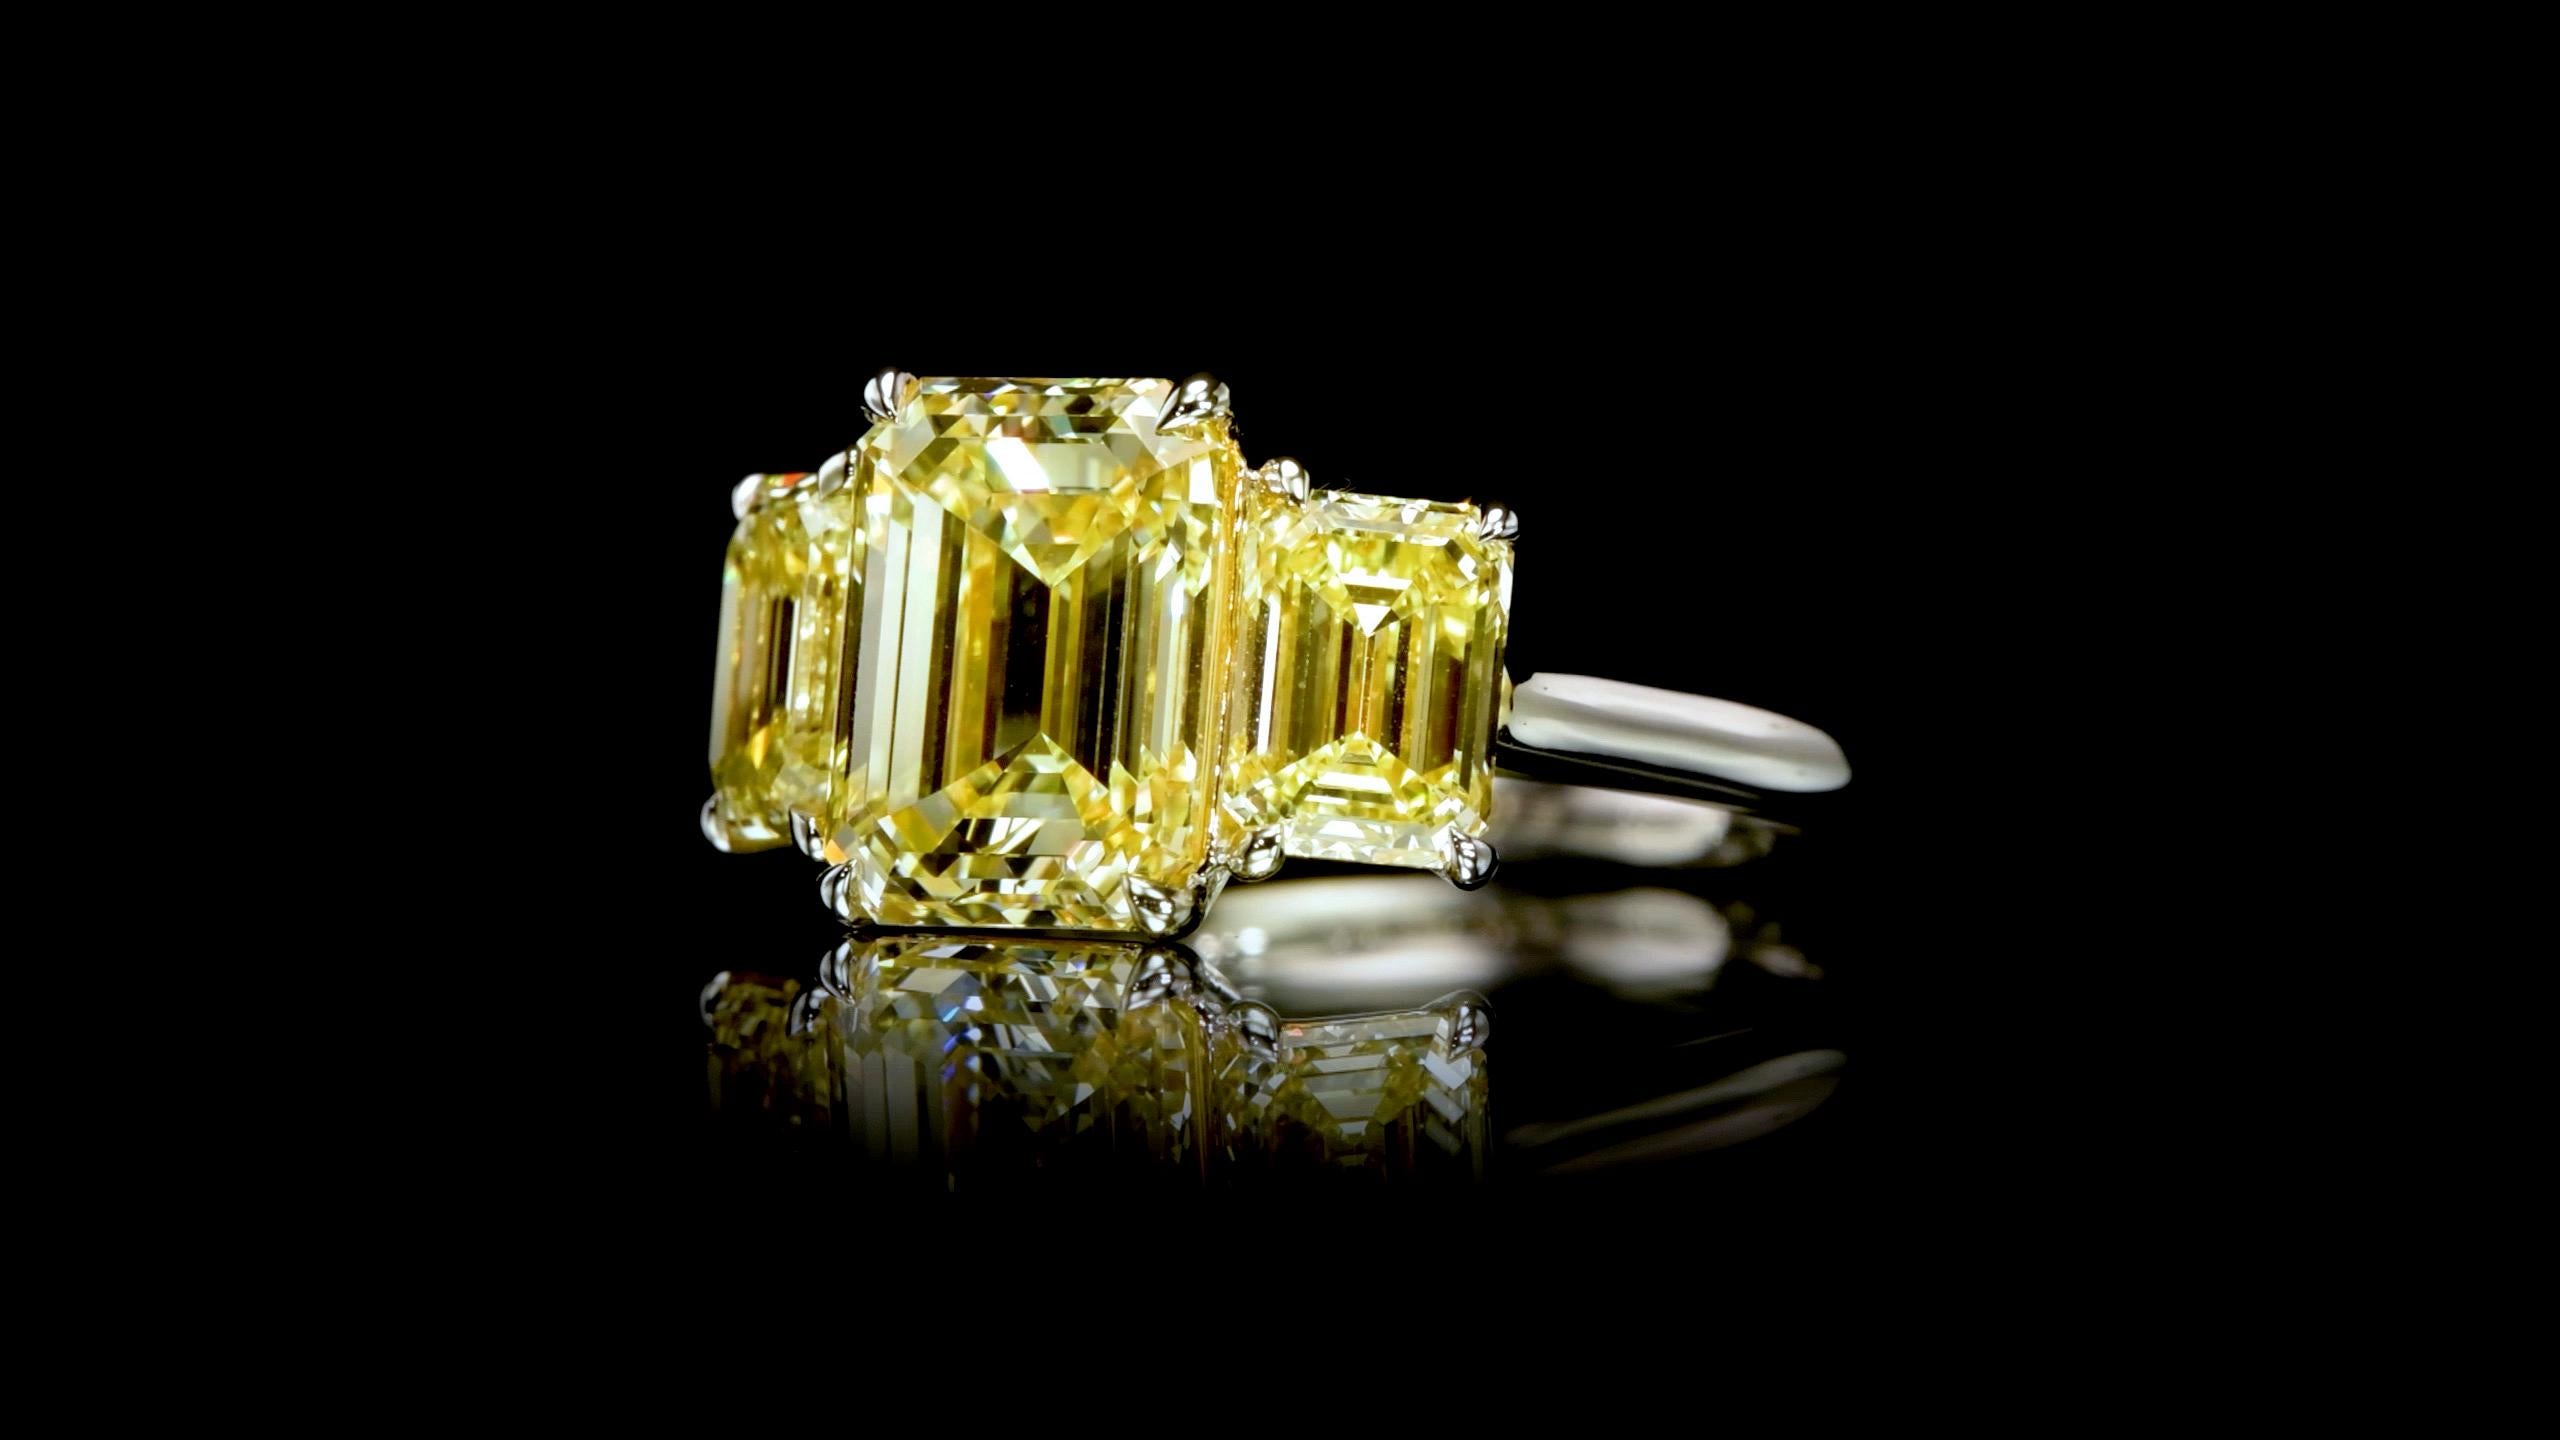 Emerald Cut Emilio Jewelry Gia Certified 5.26 Carat Yellow Diamond Ring  For Sale